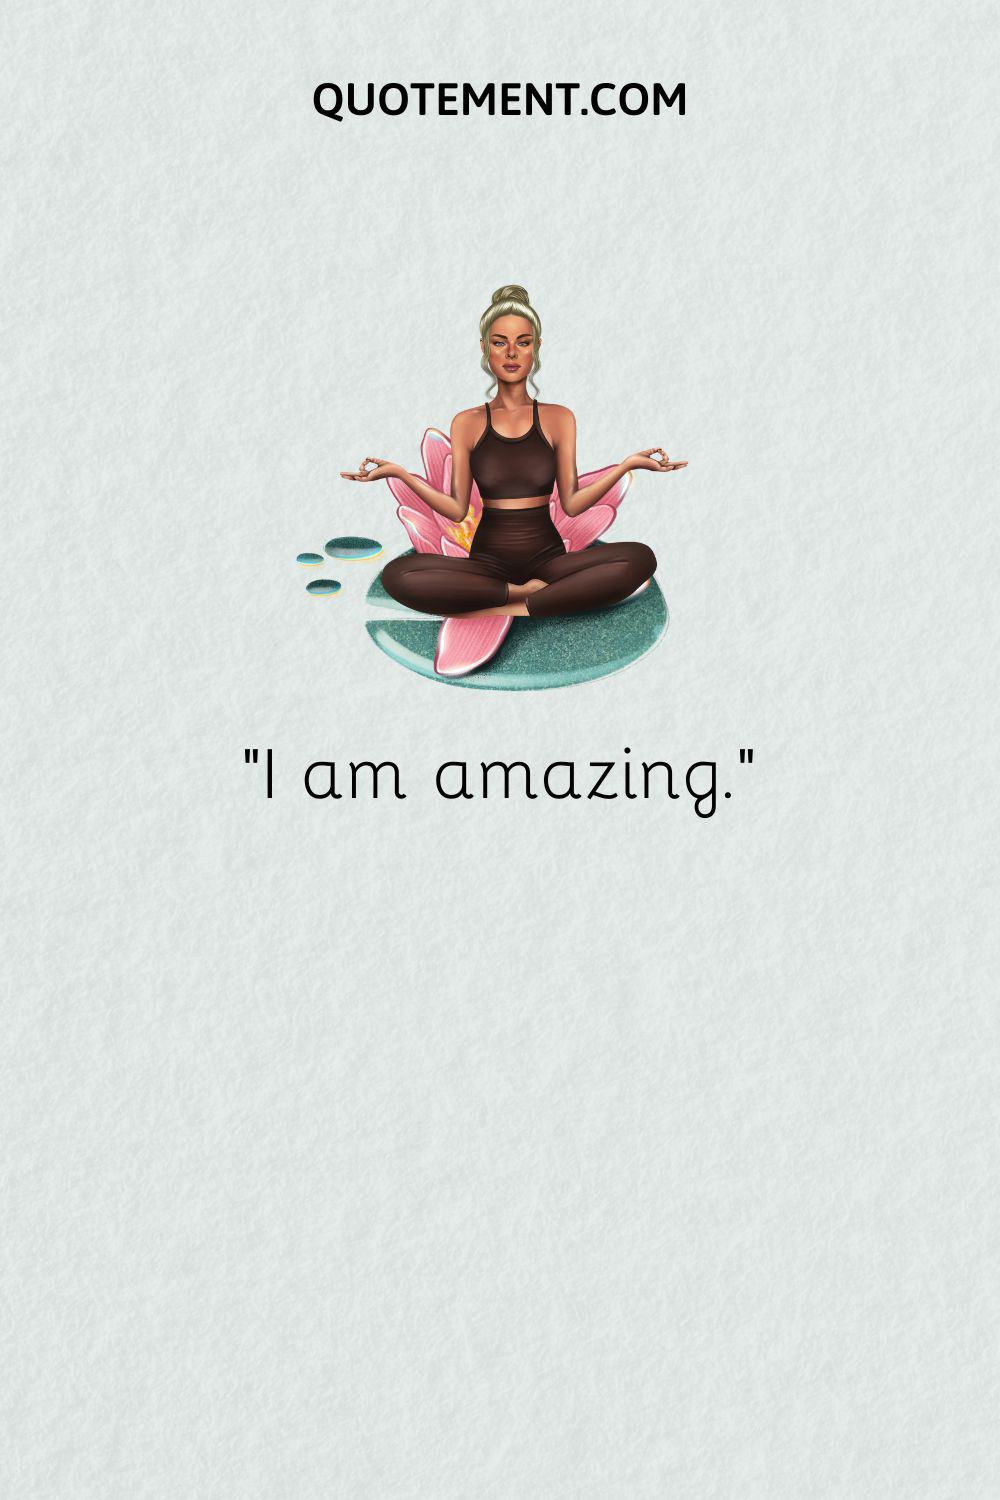 image of a girl meditating representing positive self affirmation